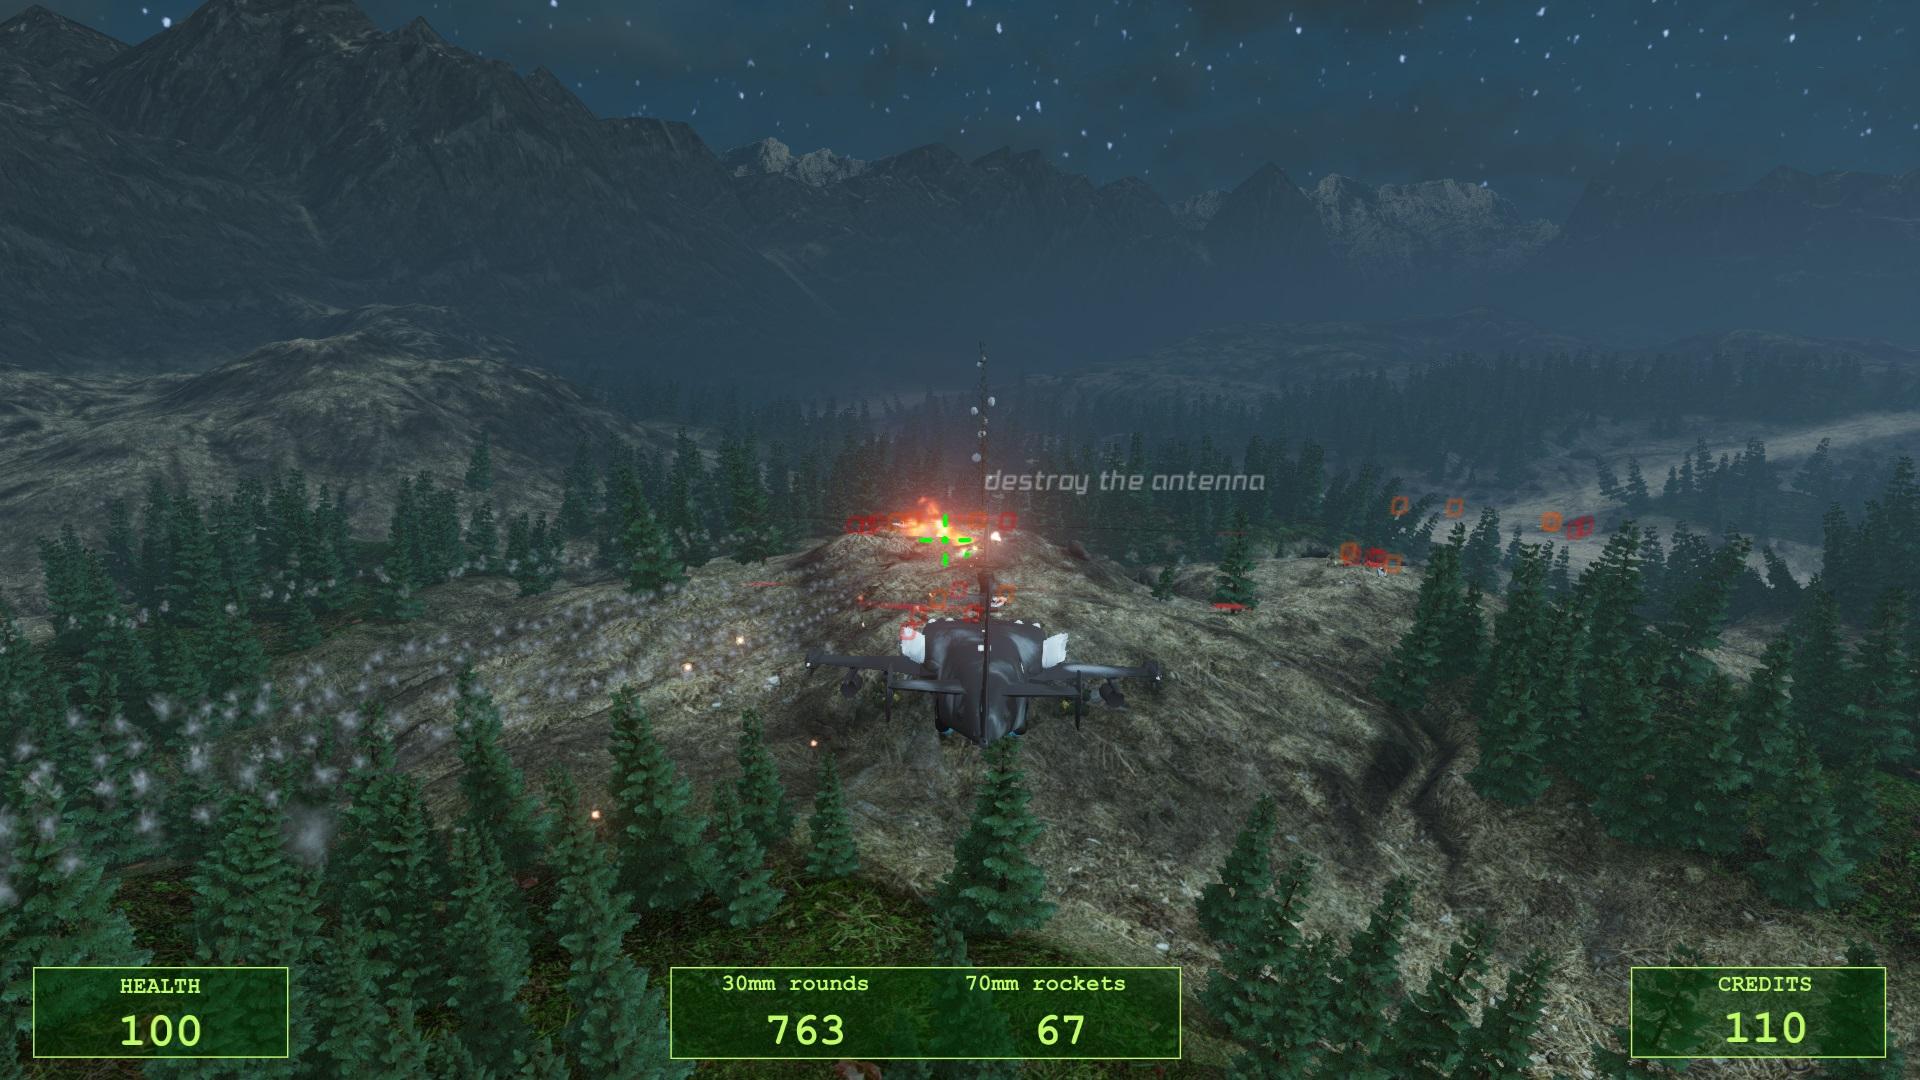 Screenshot №9 from game Aerial Destruction